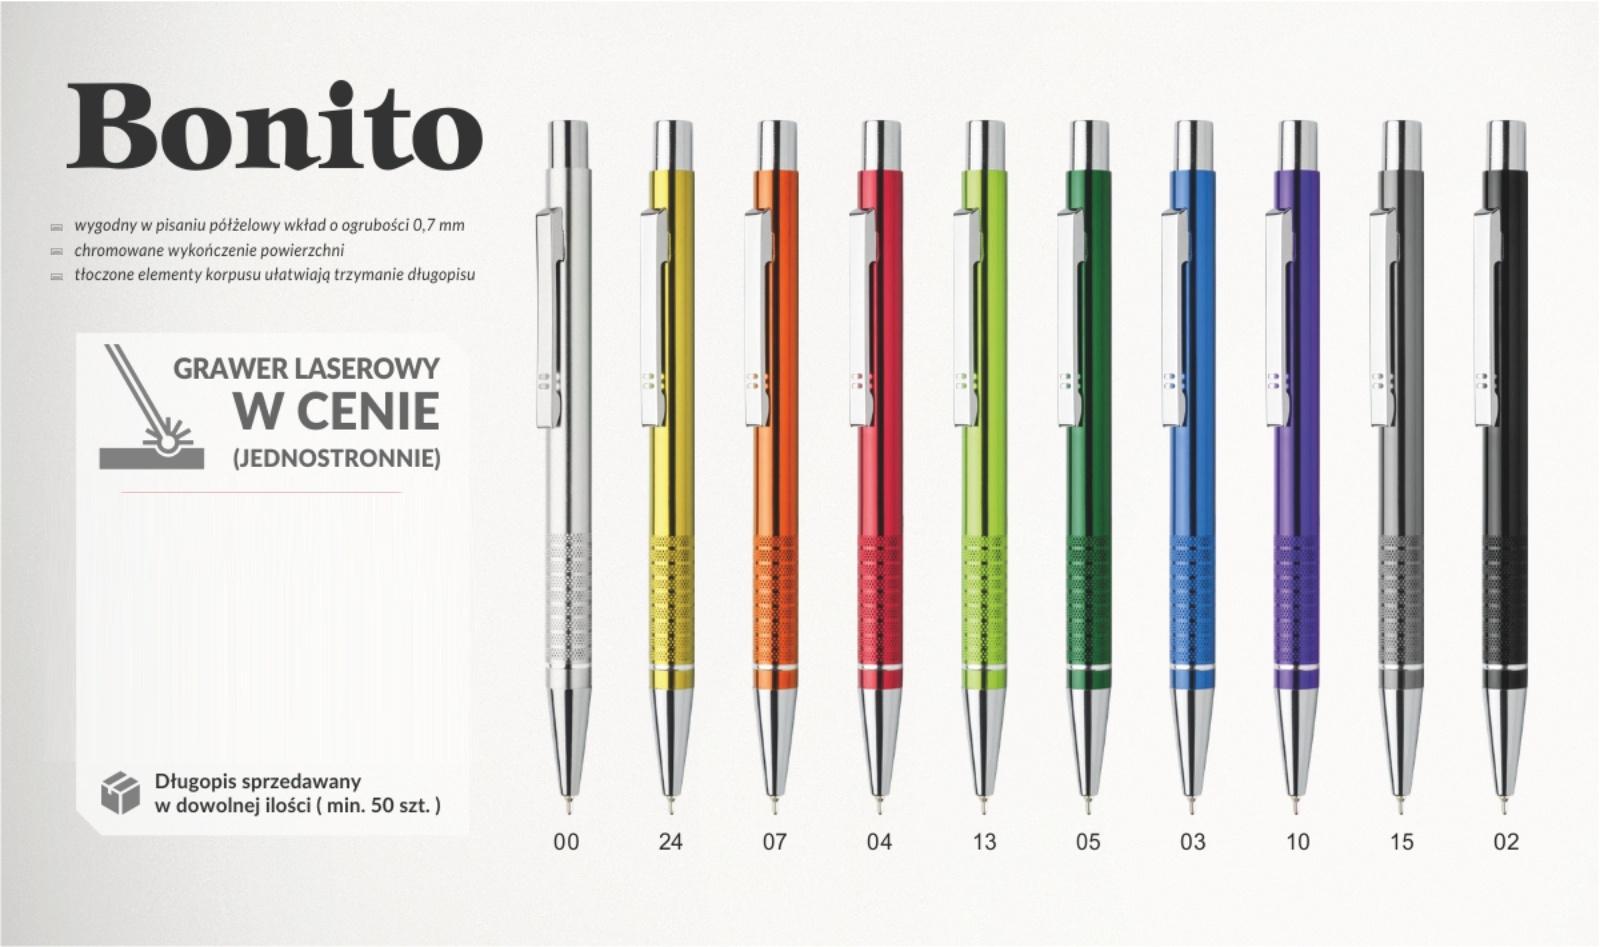 1 bonito - Długopisy z grawerem